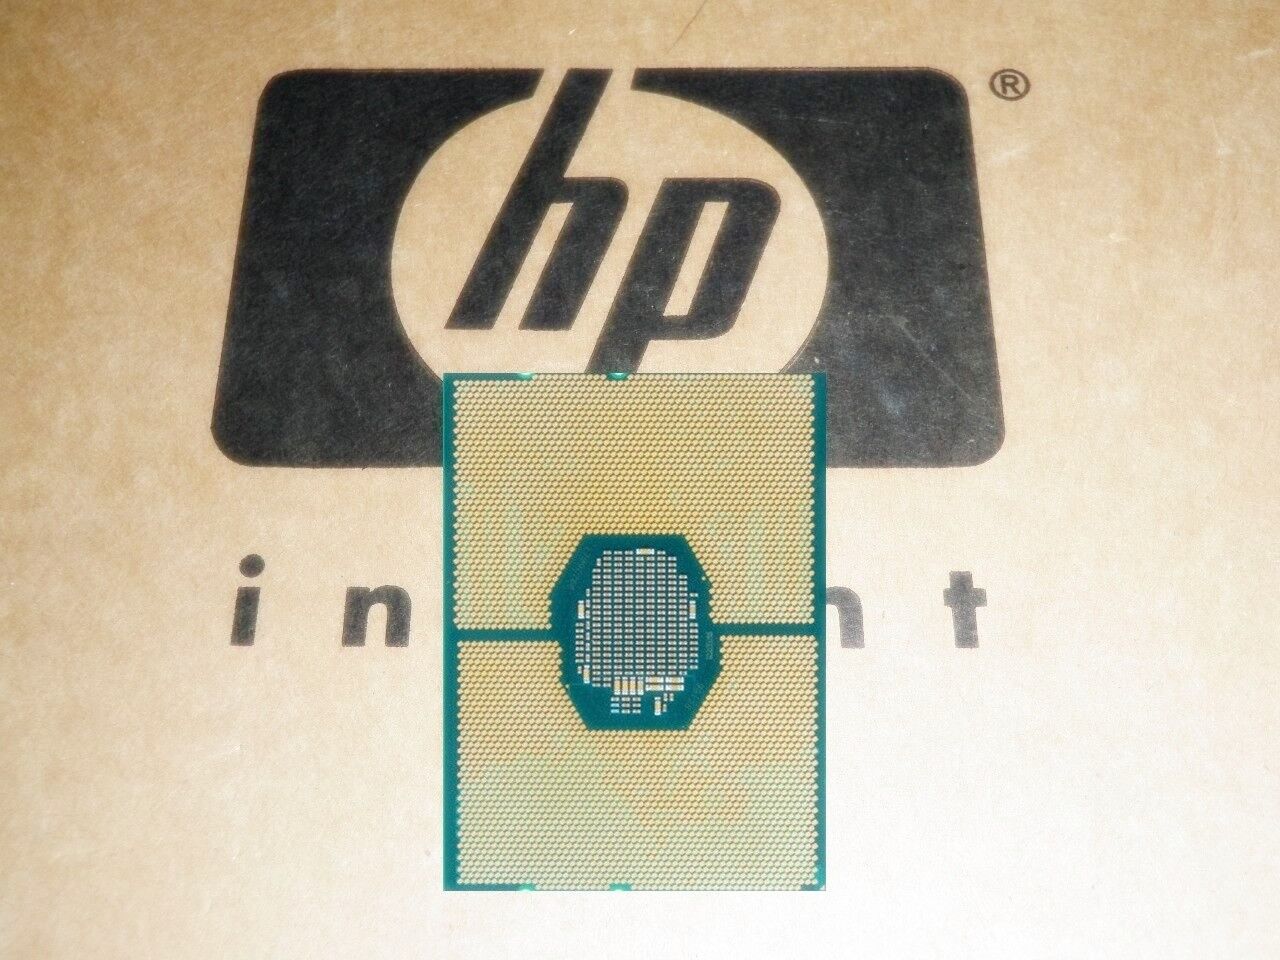 L58106-003 NEW HP 2.8Ghz Xeon-Gold 6242 Processor for Z6 G4 Z8 G4 Workstation